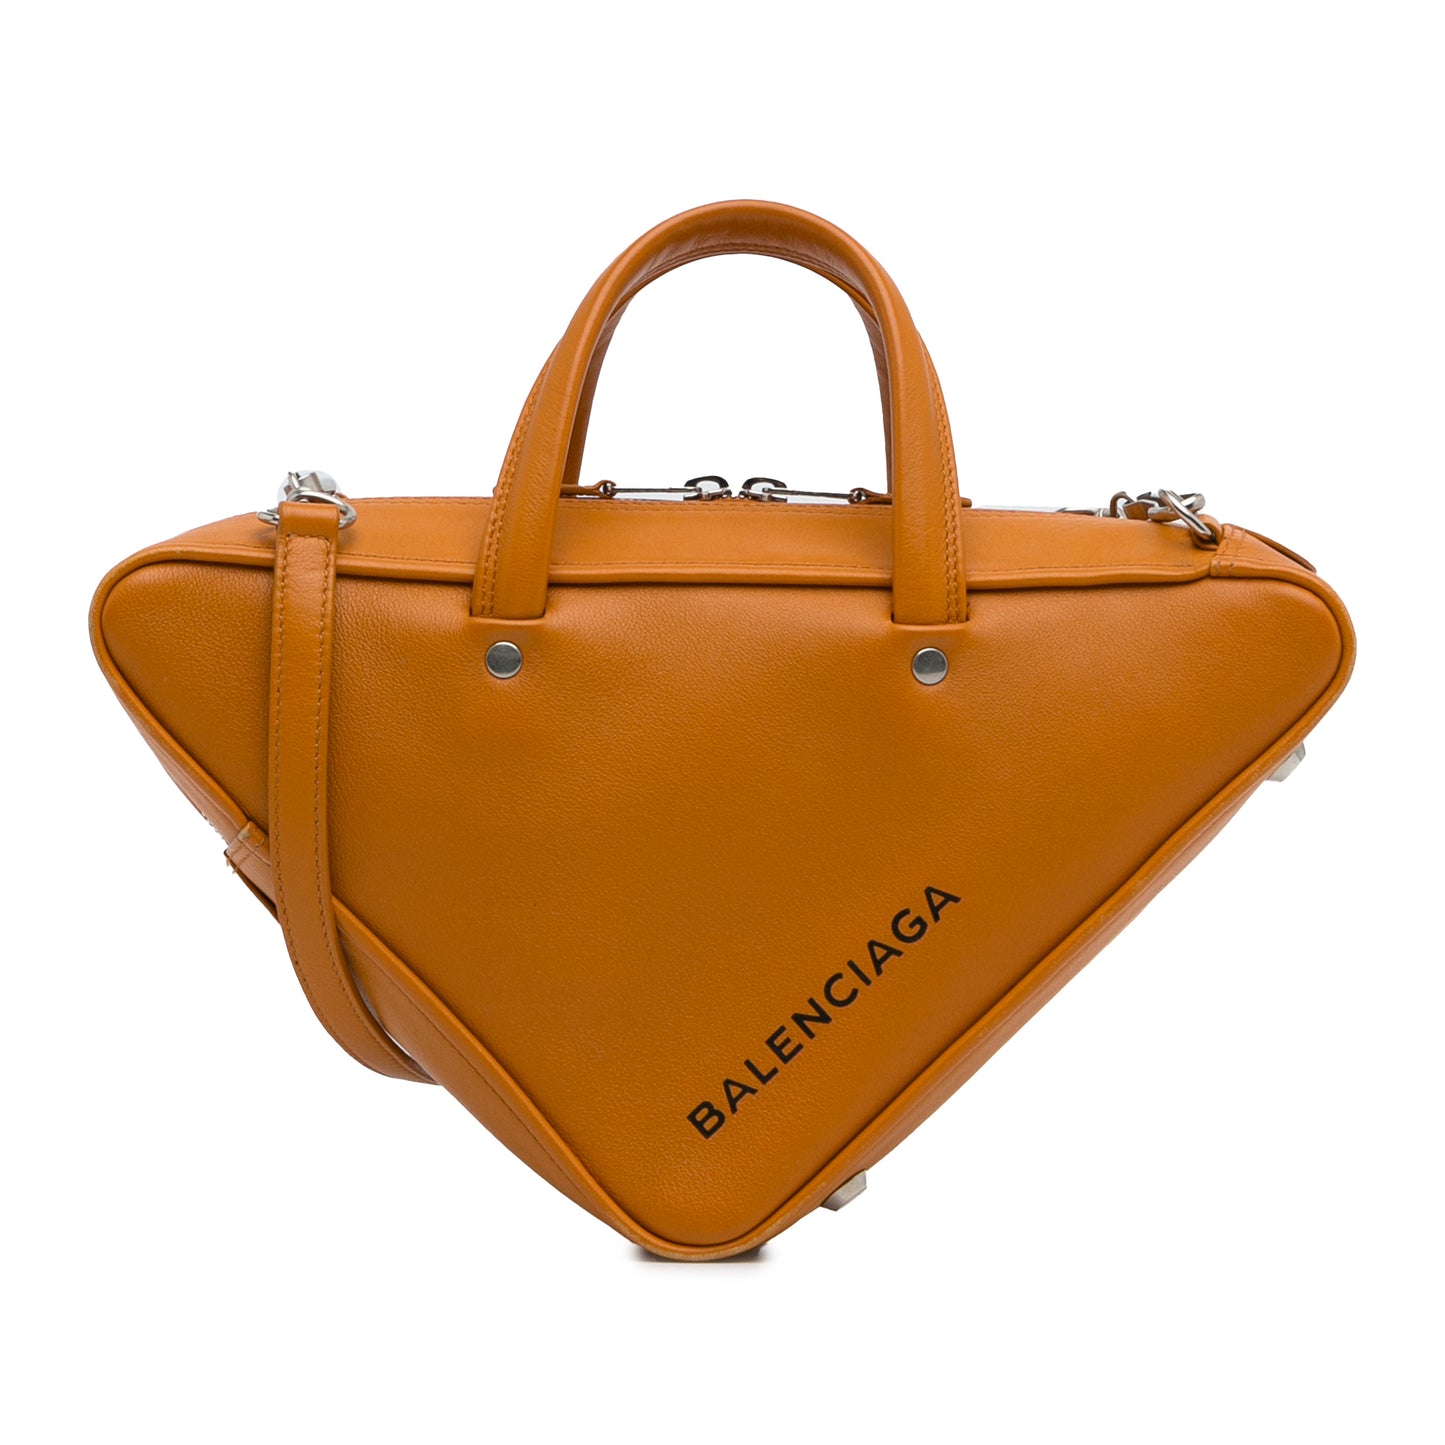 S Triangle Duffle Bag Orange - Gaby Paris